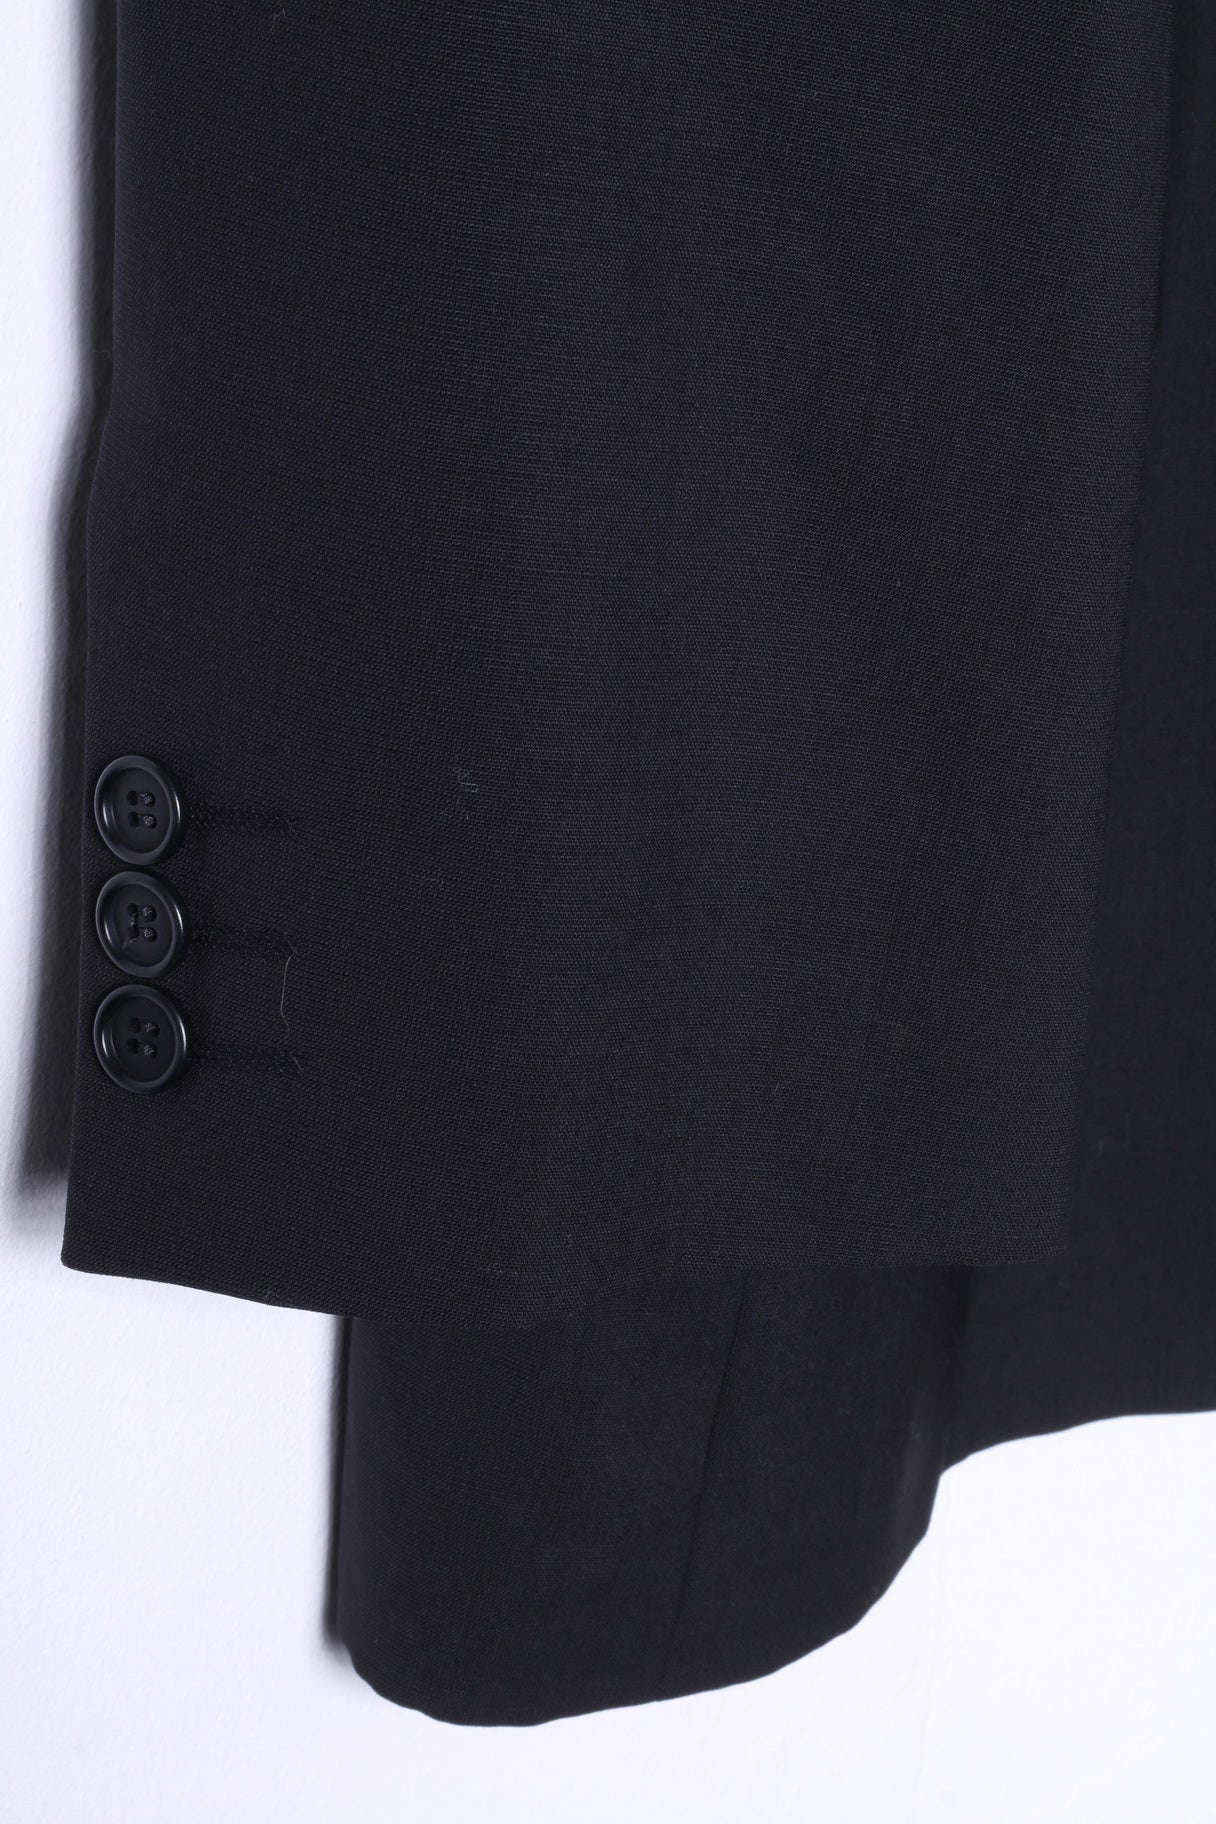 Balmain Paris Mens 40S Blazer Black 100% Wool Single Breasted Suit Jacket